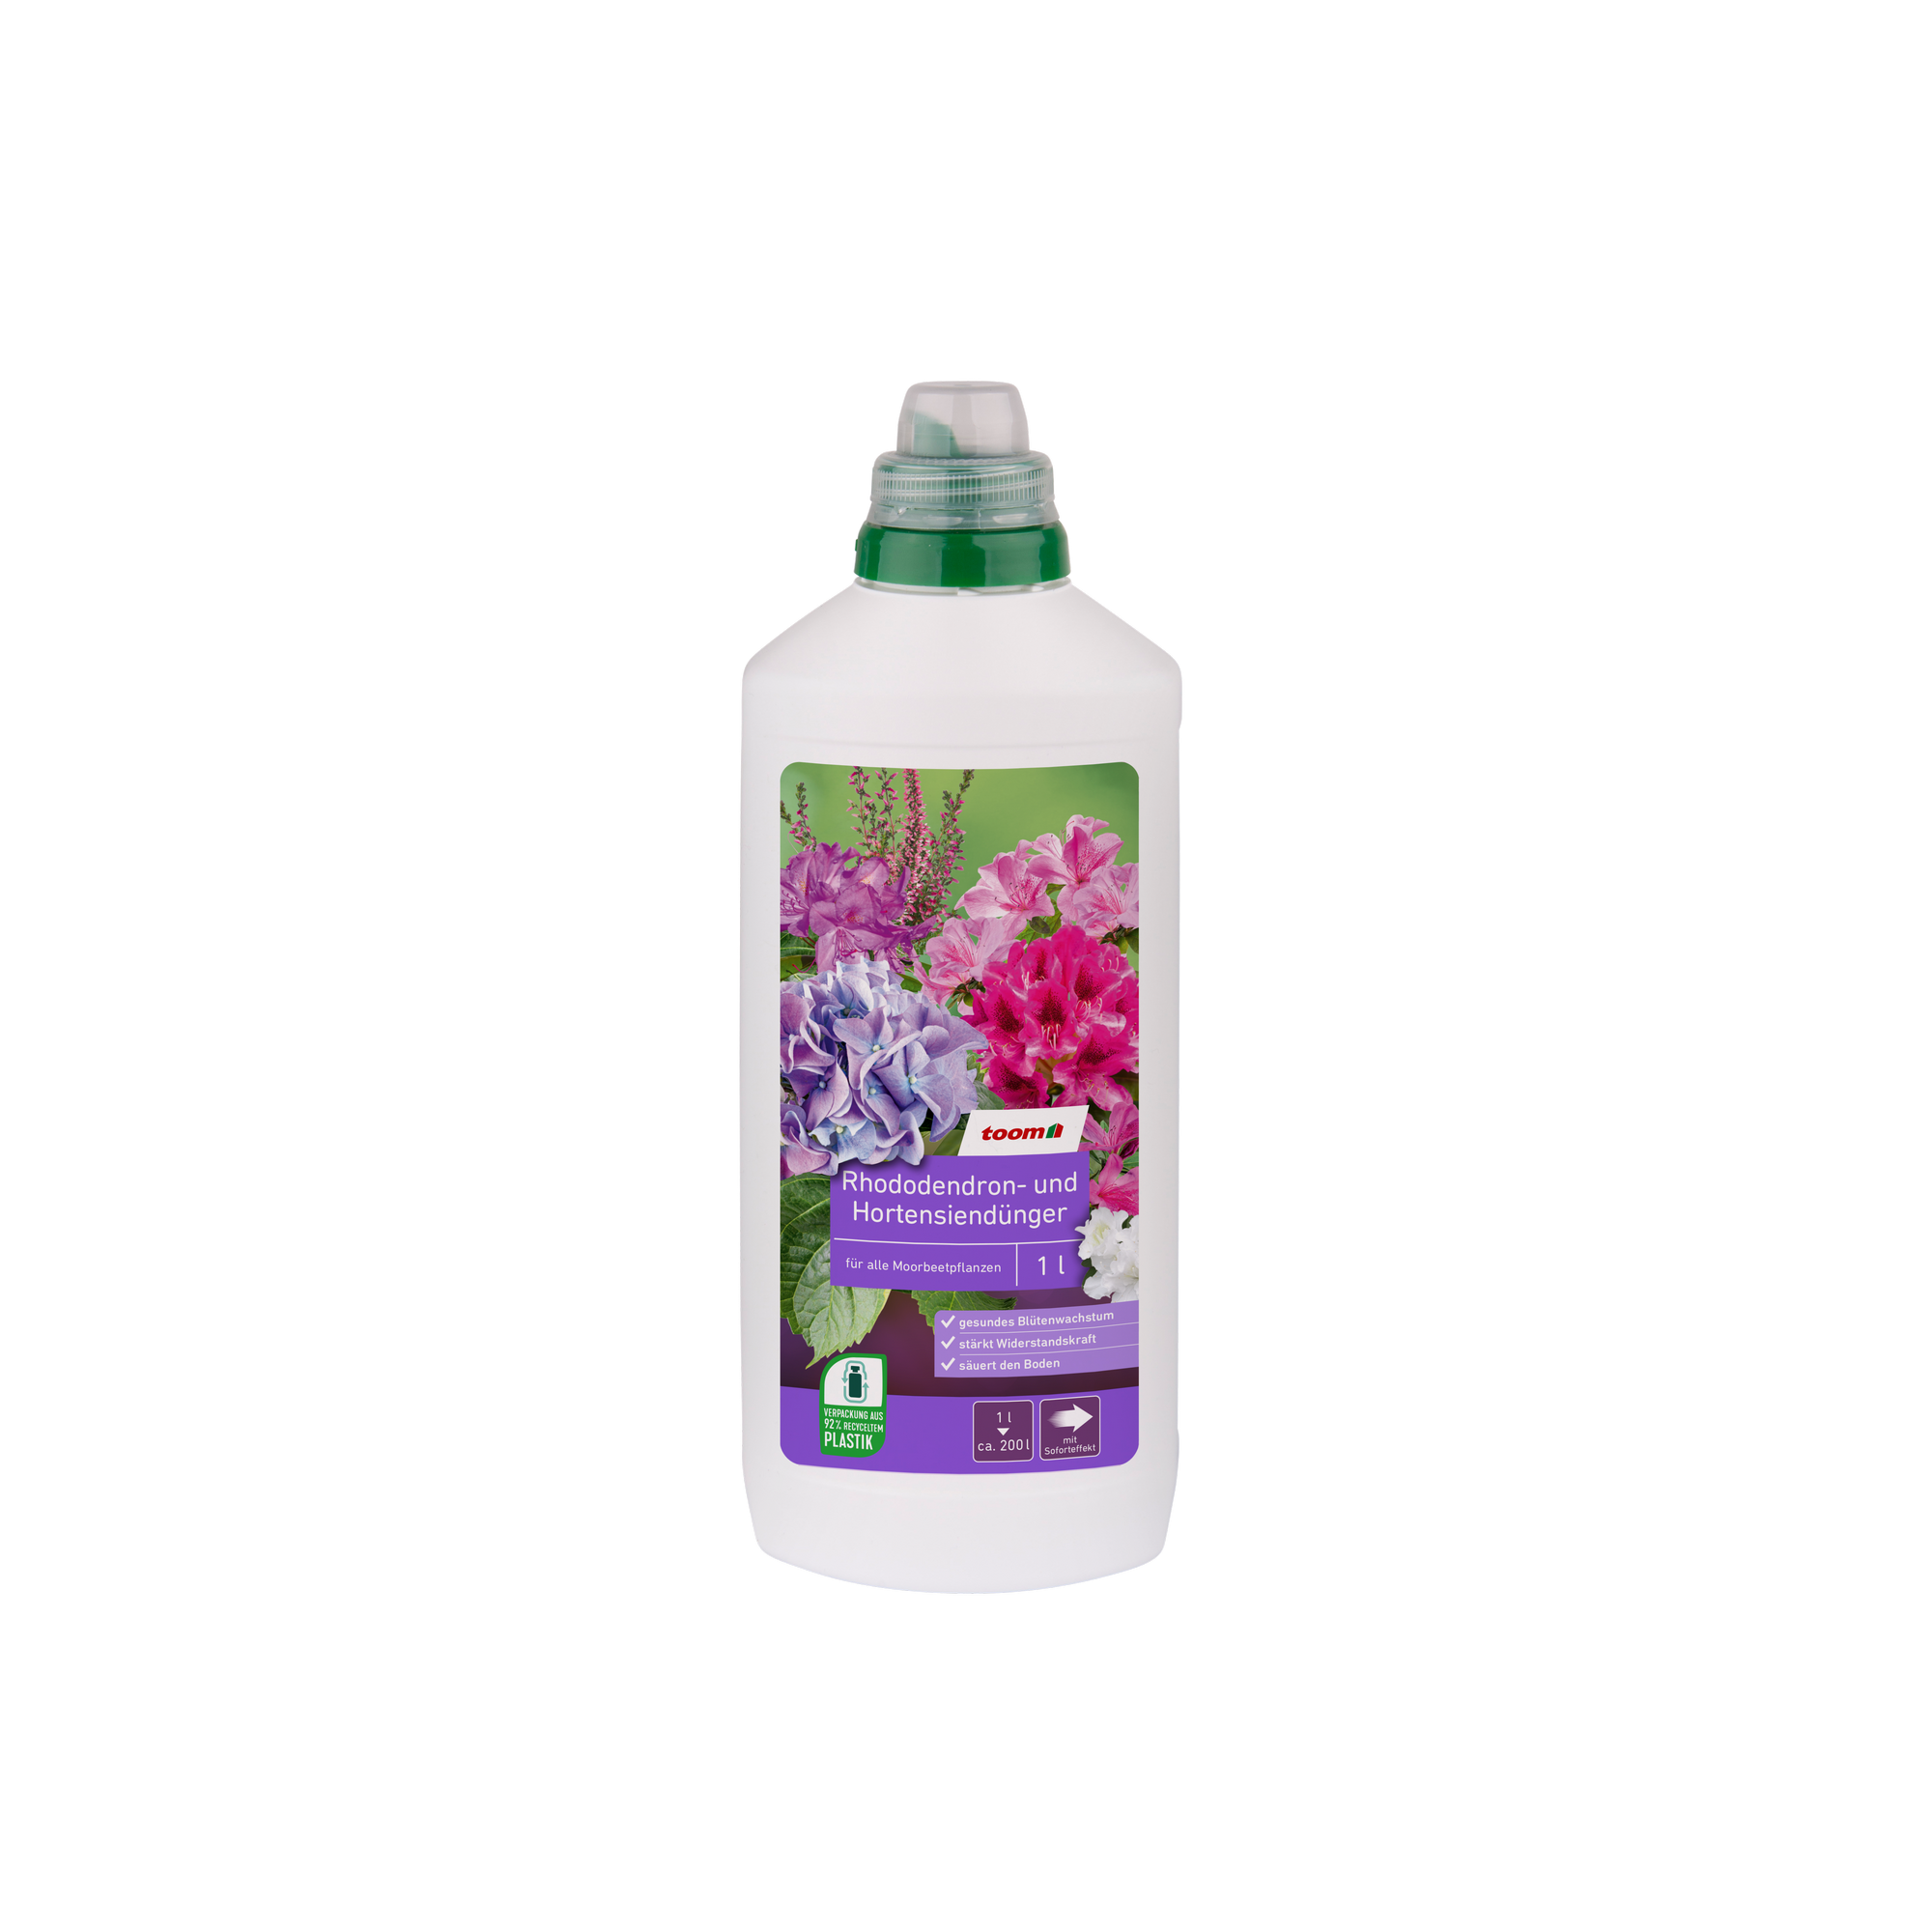 Rhododendron- und Hortensiendünger 1 l + product picture